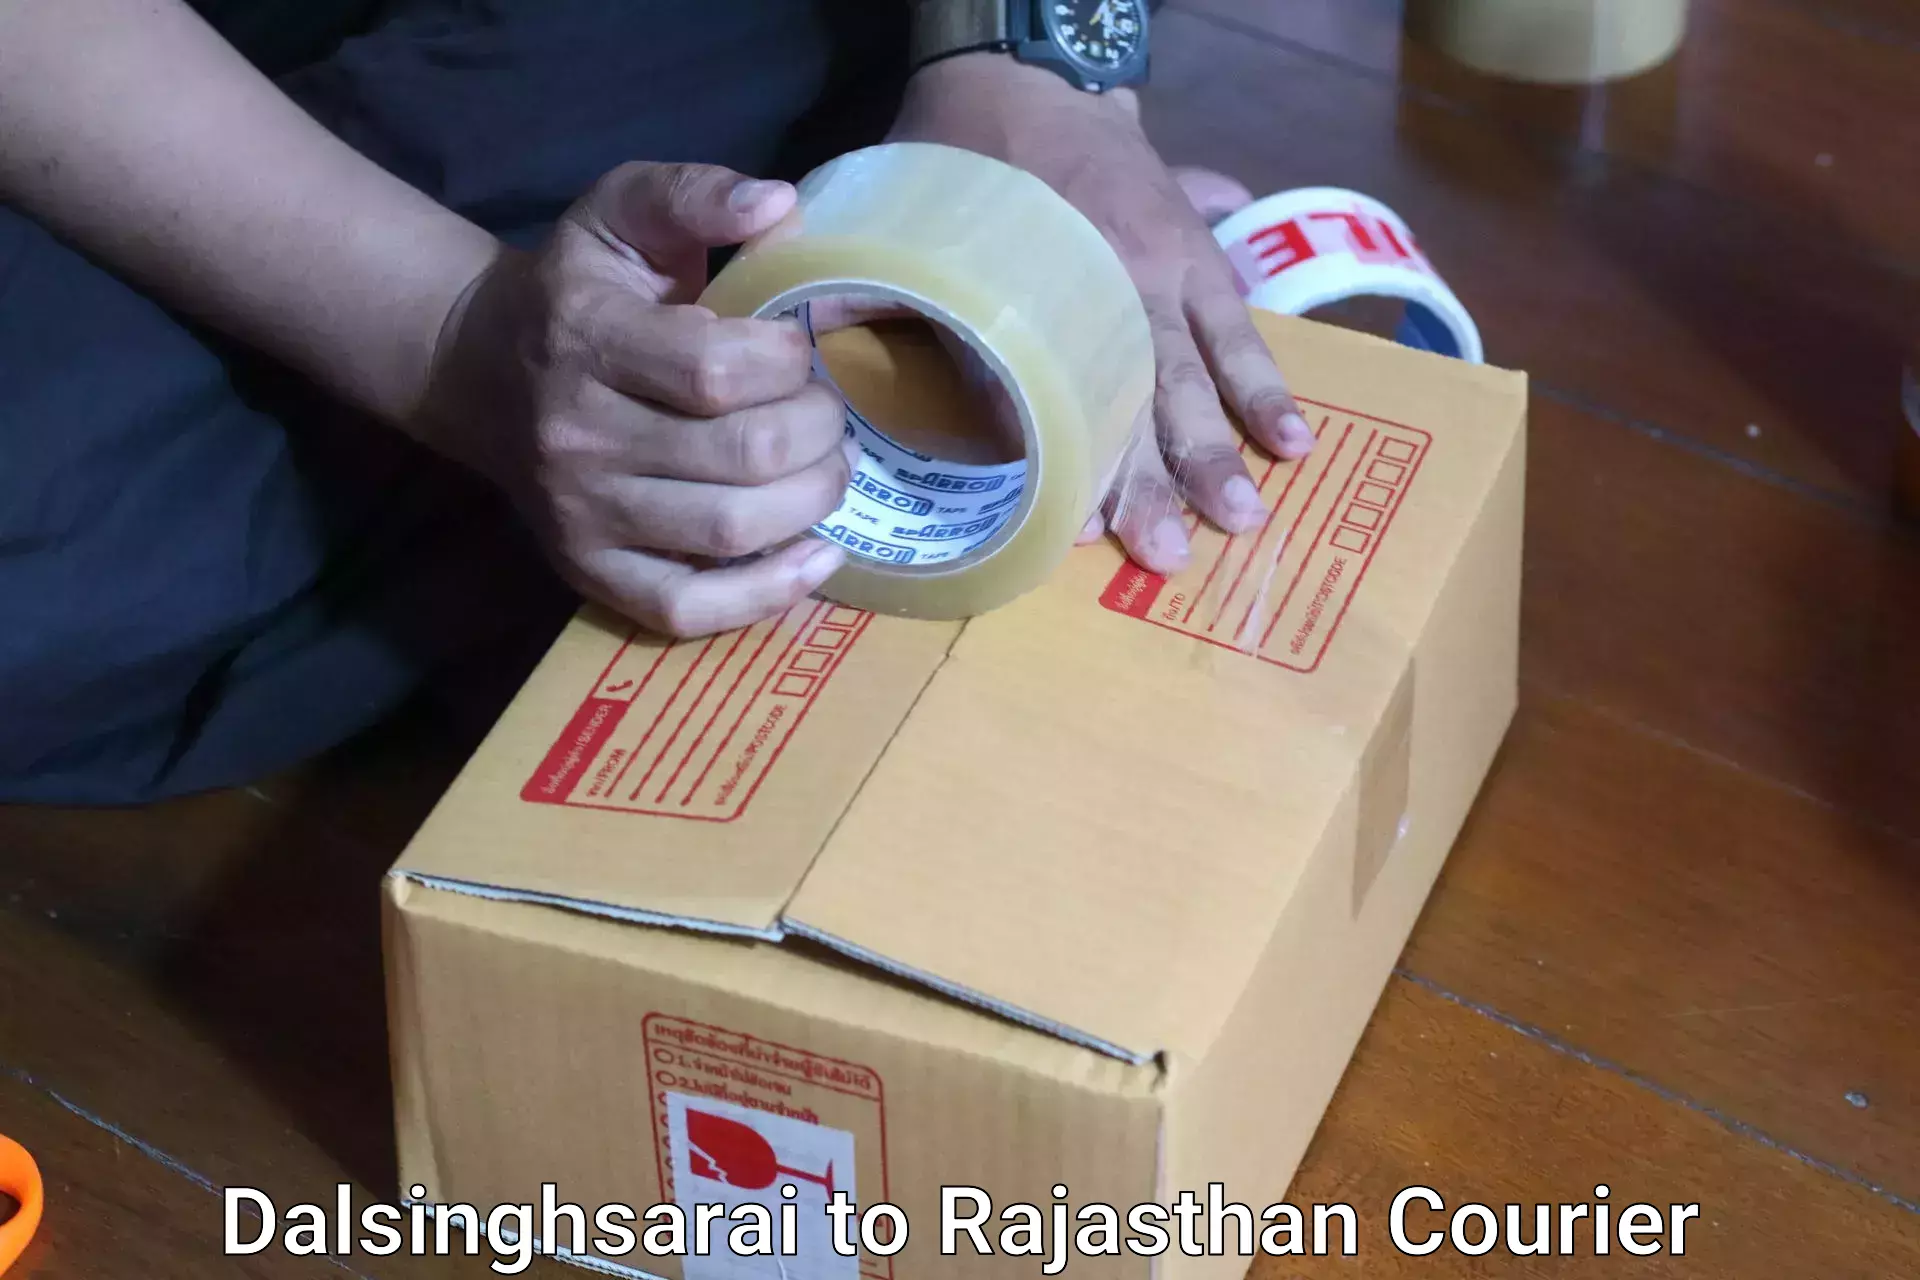 Luggage shipment specialists Dalsinghsarai to Rajasthan